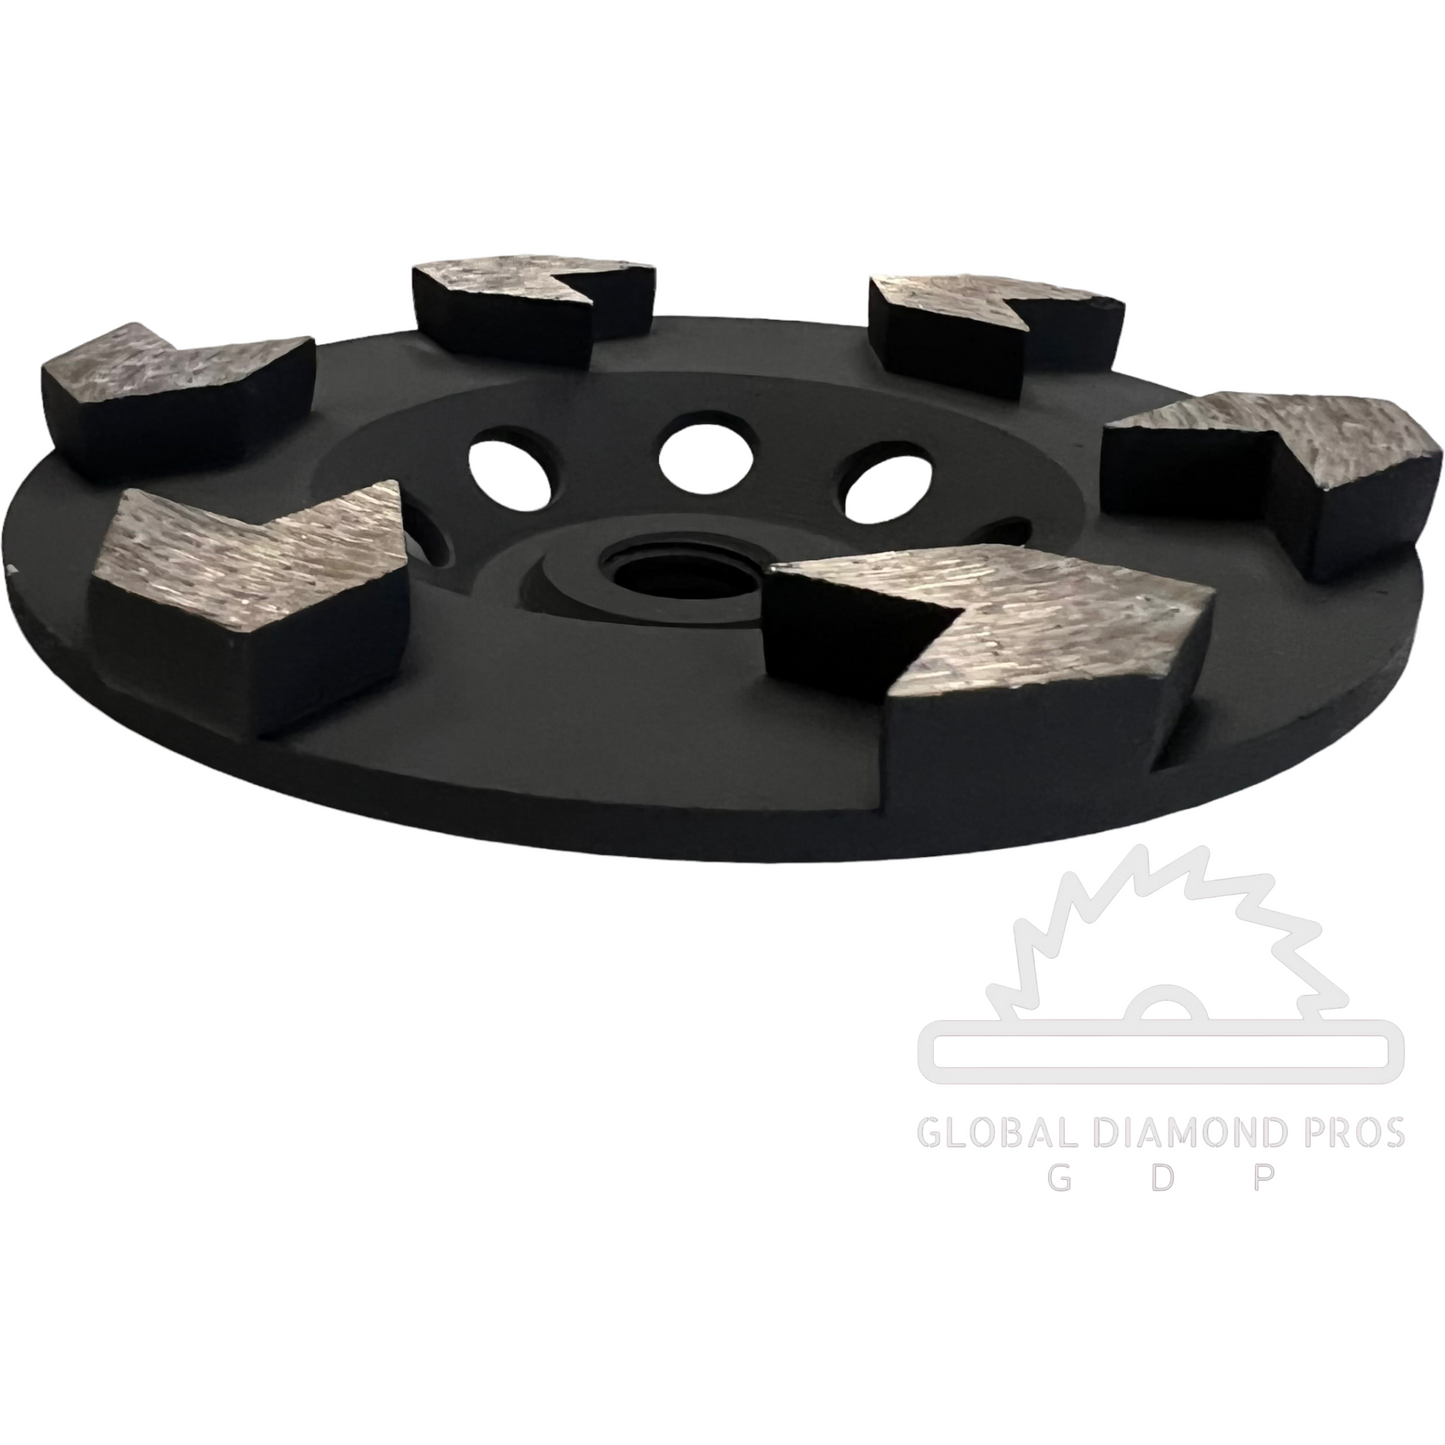 5” Premium Turbo Diamond Cup Wheel for Concrete Stone Grinding 5/8"-11 Arbor